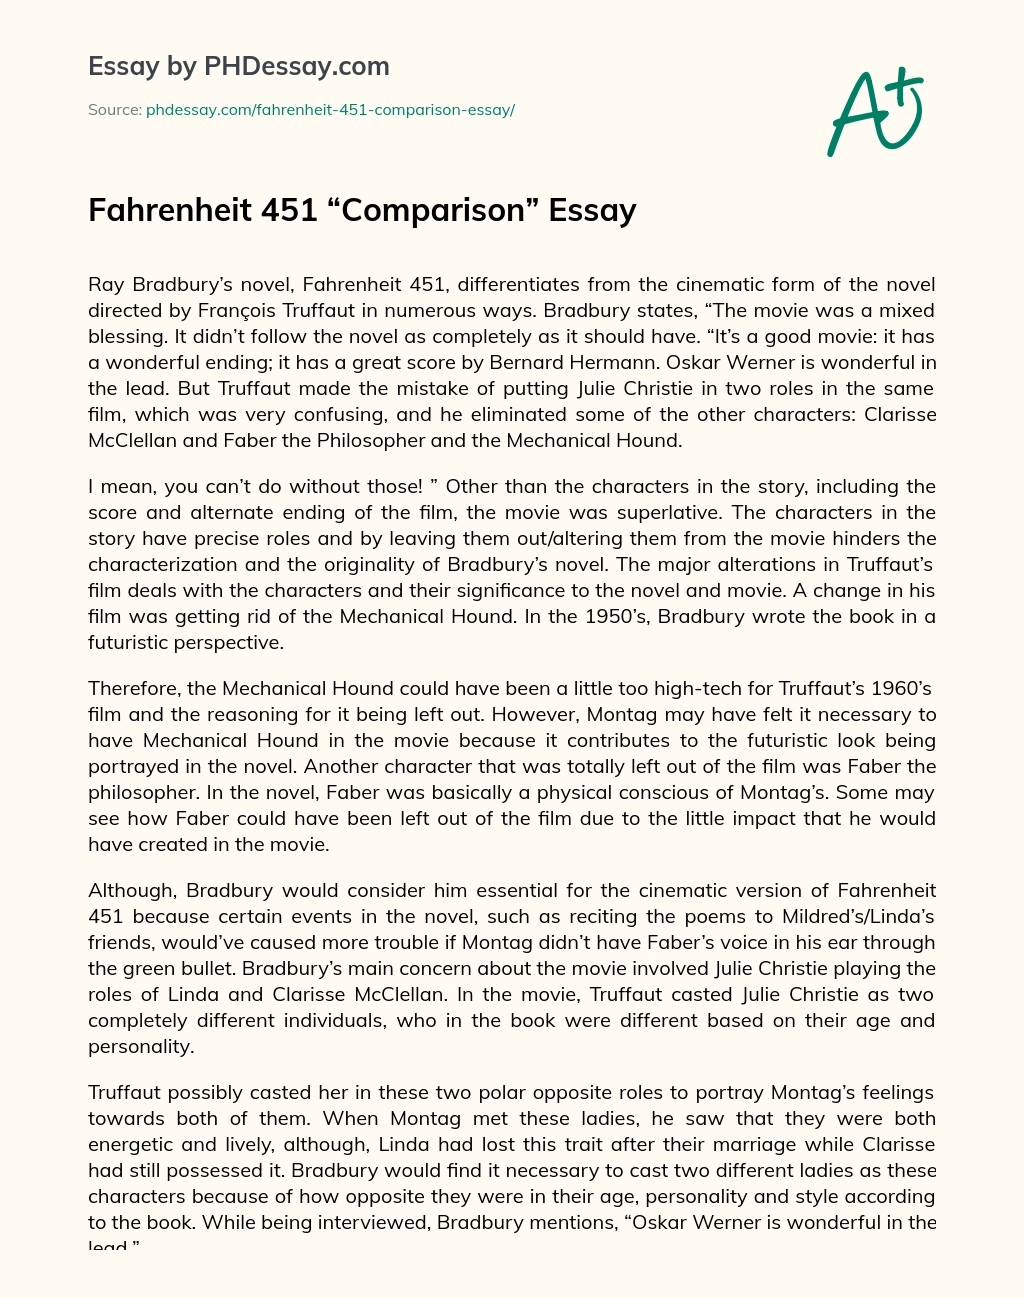 Fahrenheit 451 “Comparison” Essay essay